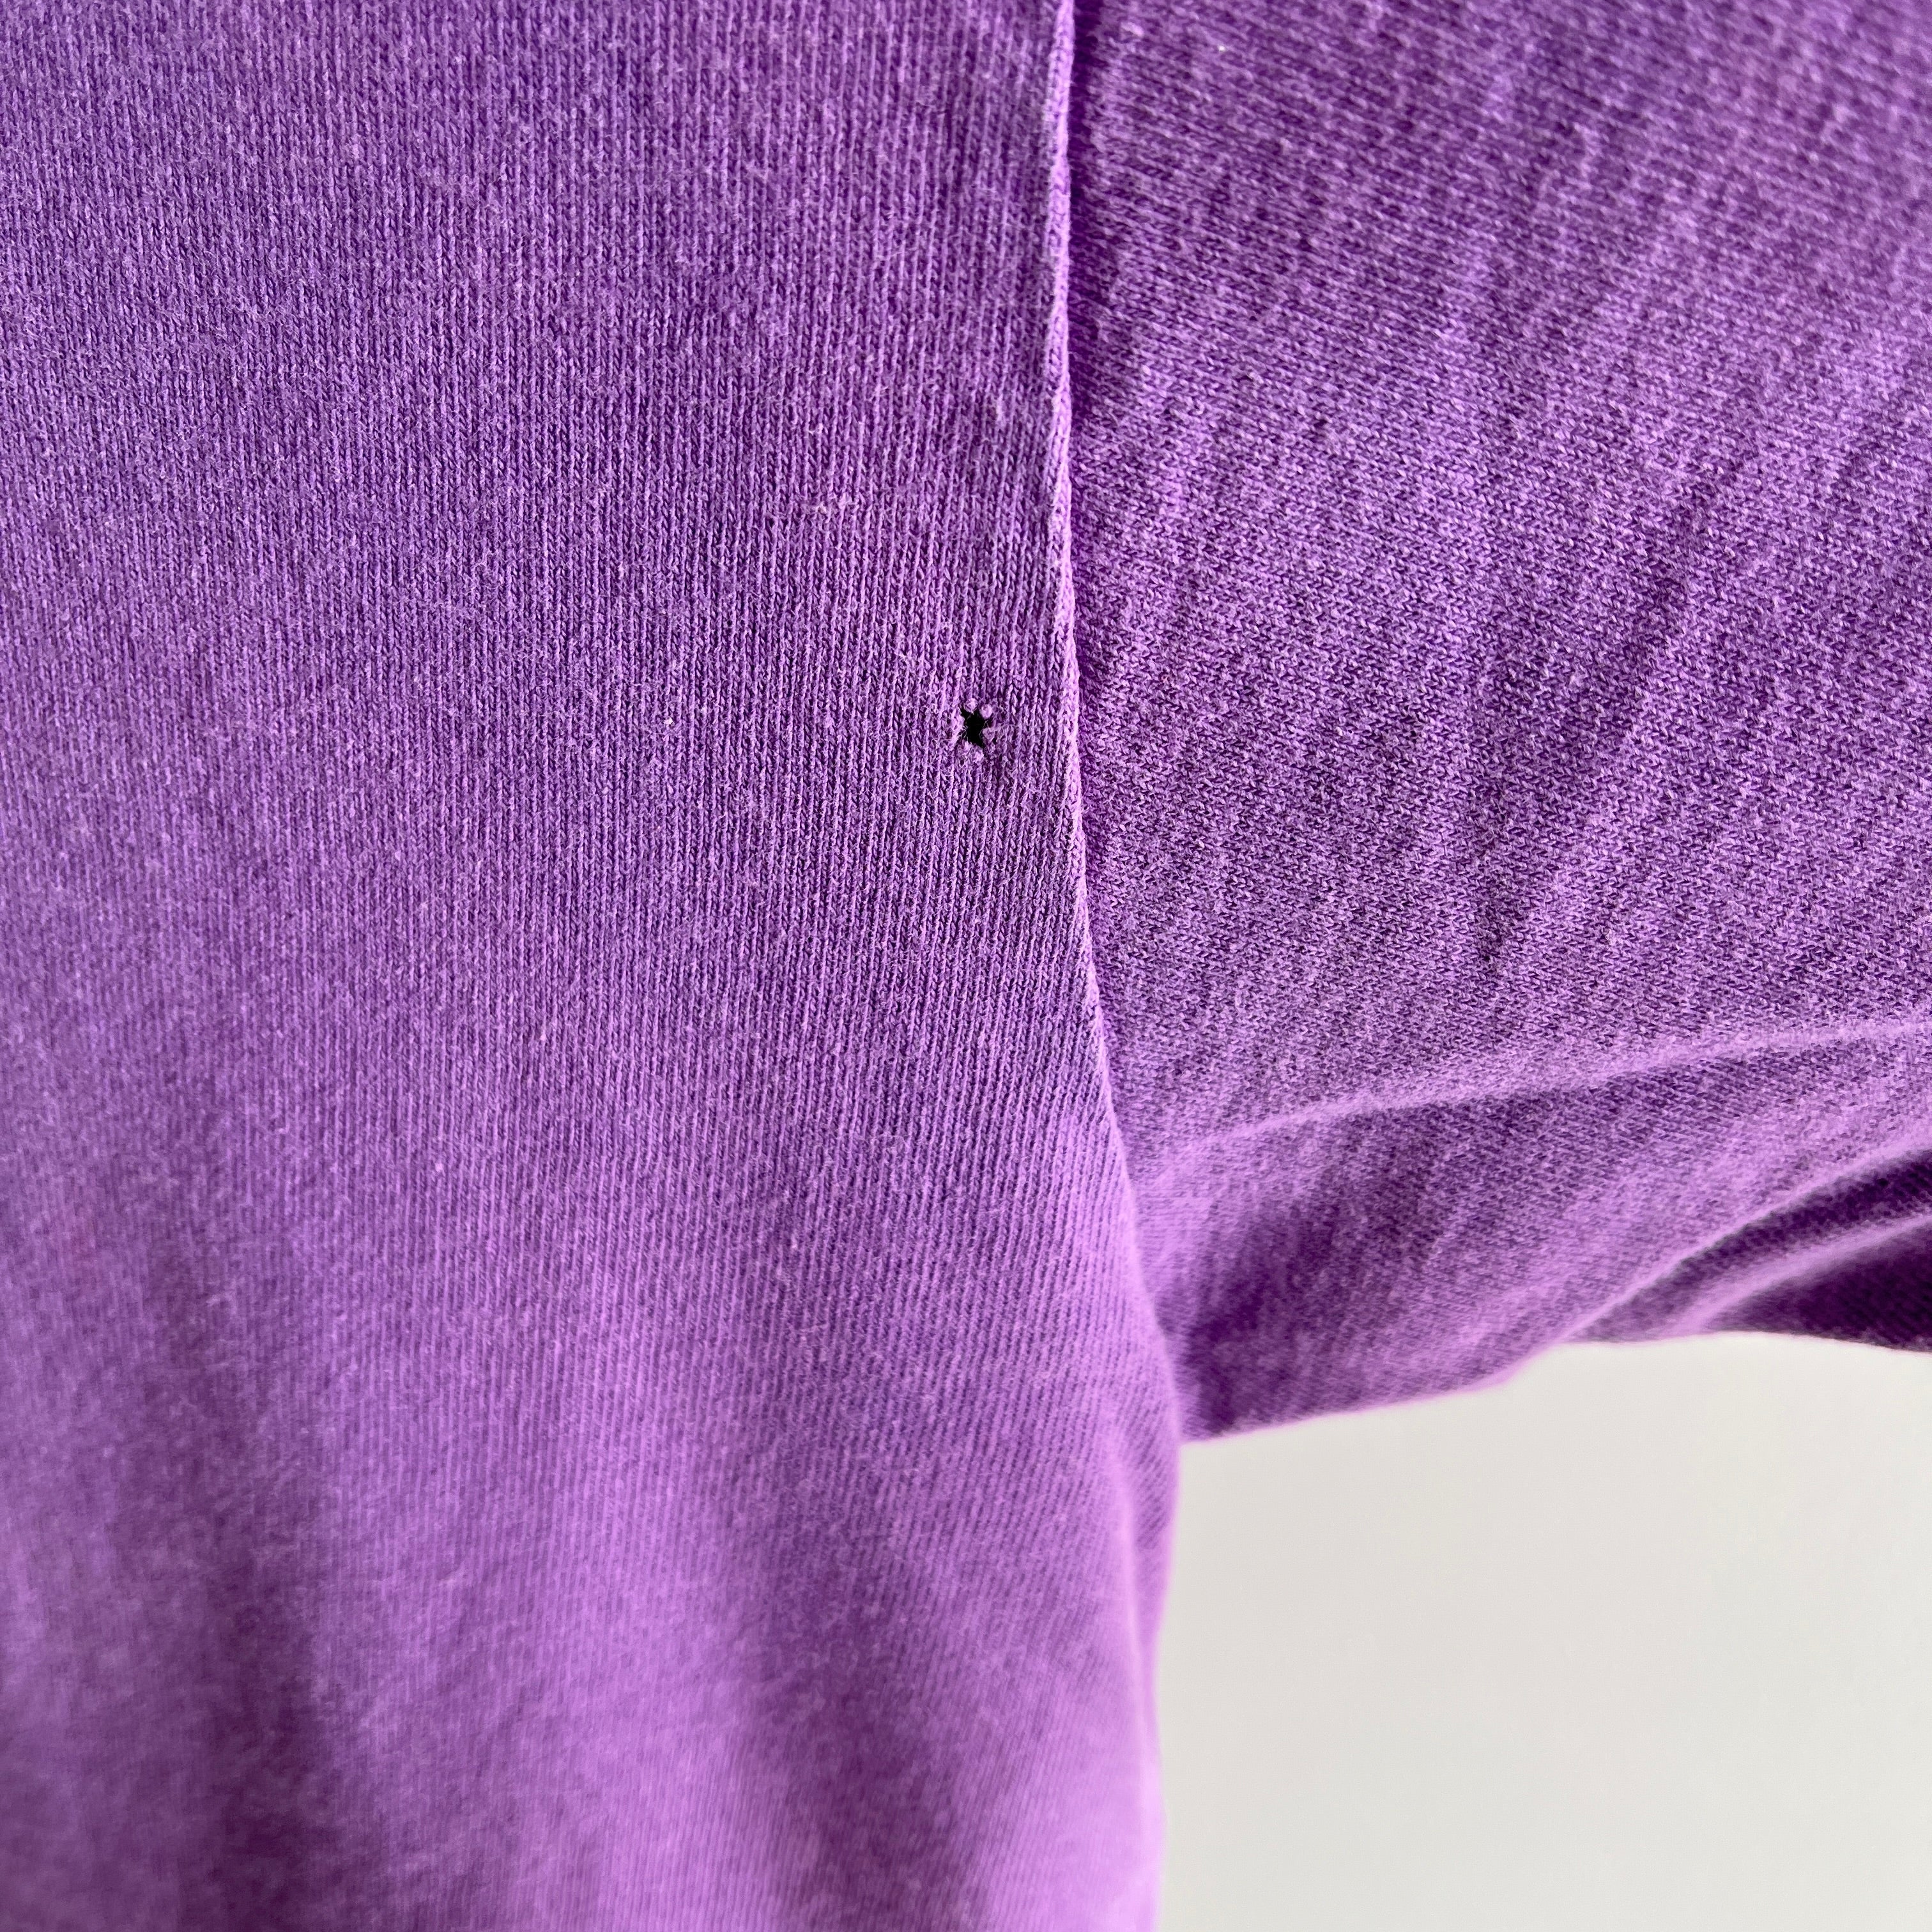 1980s Lavender FOTL Ladies Combed Cotton Blank T-Shirt